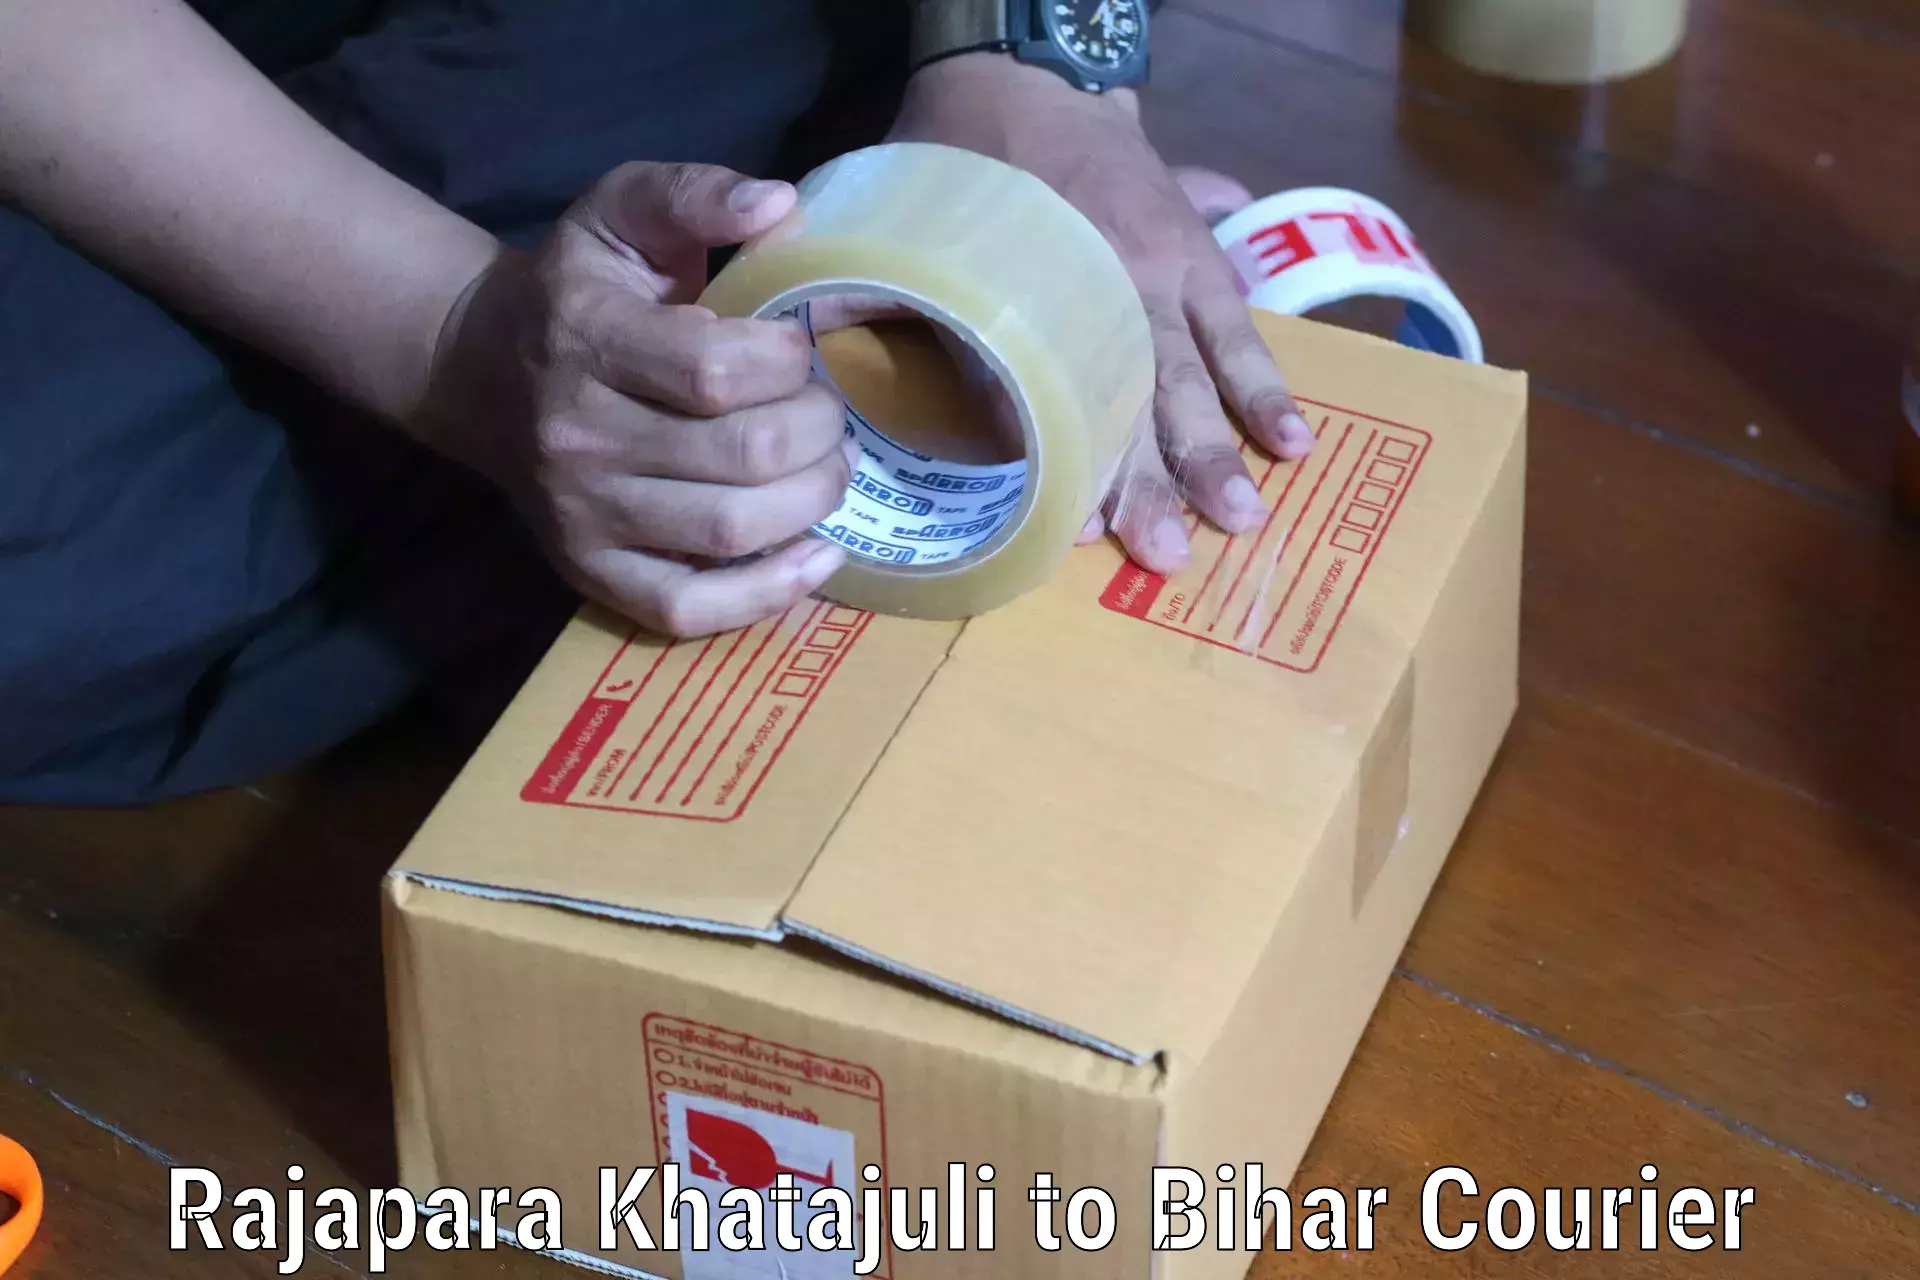 24-hour courier service Rajapara Khatajuli to Mohammadpur